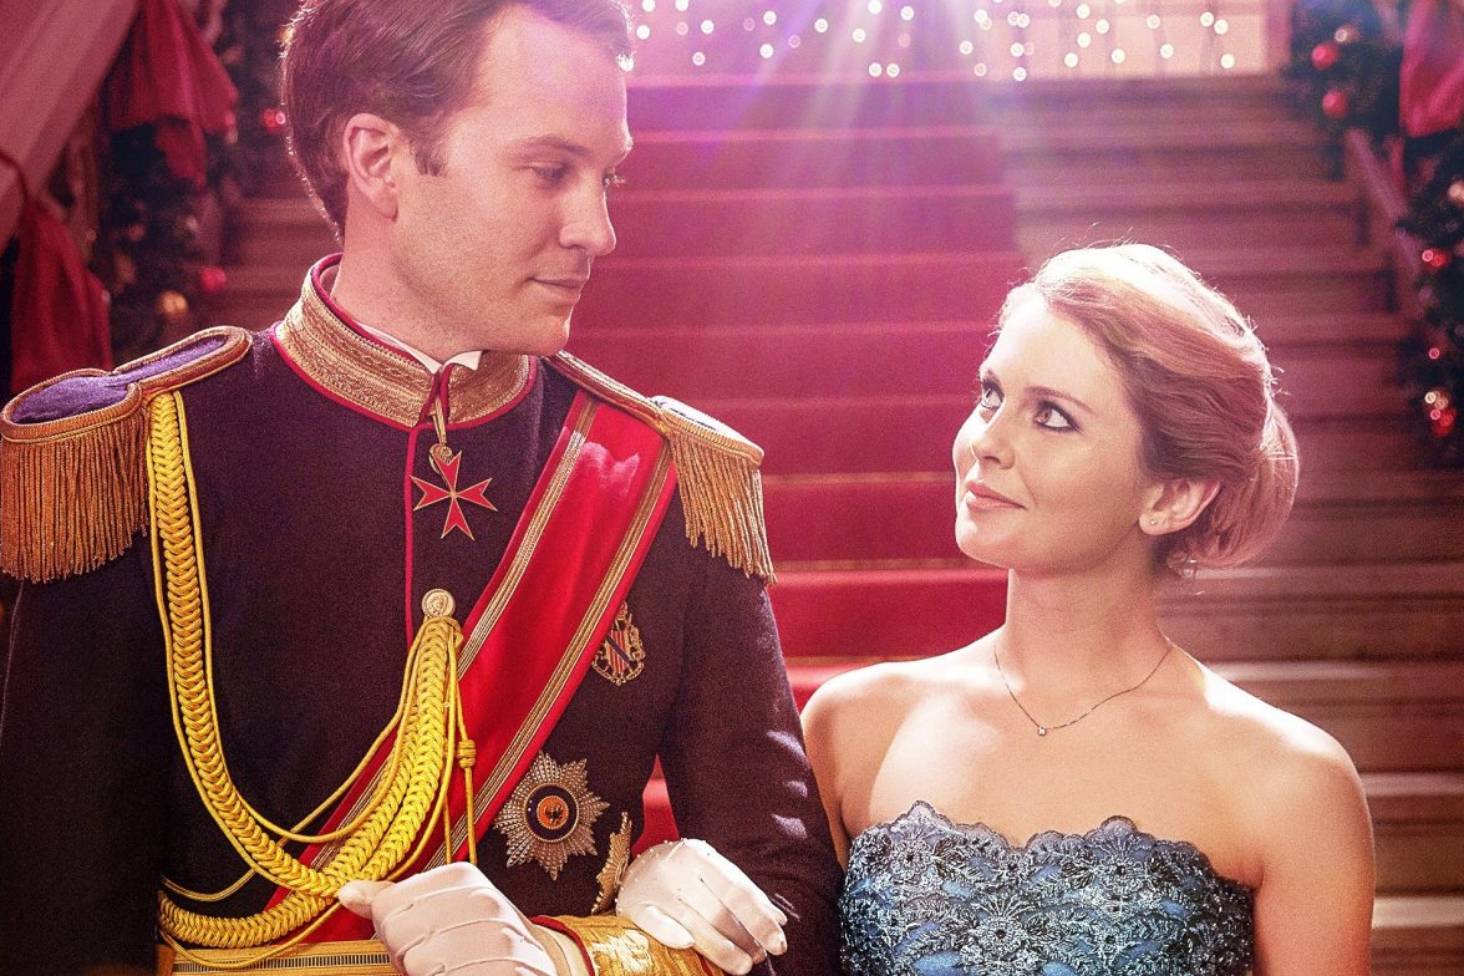 A Christmas Prince: The Royal Wedding Trailer Has Everything You Expect